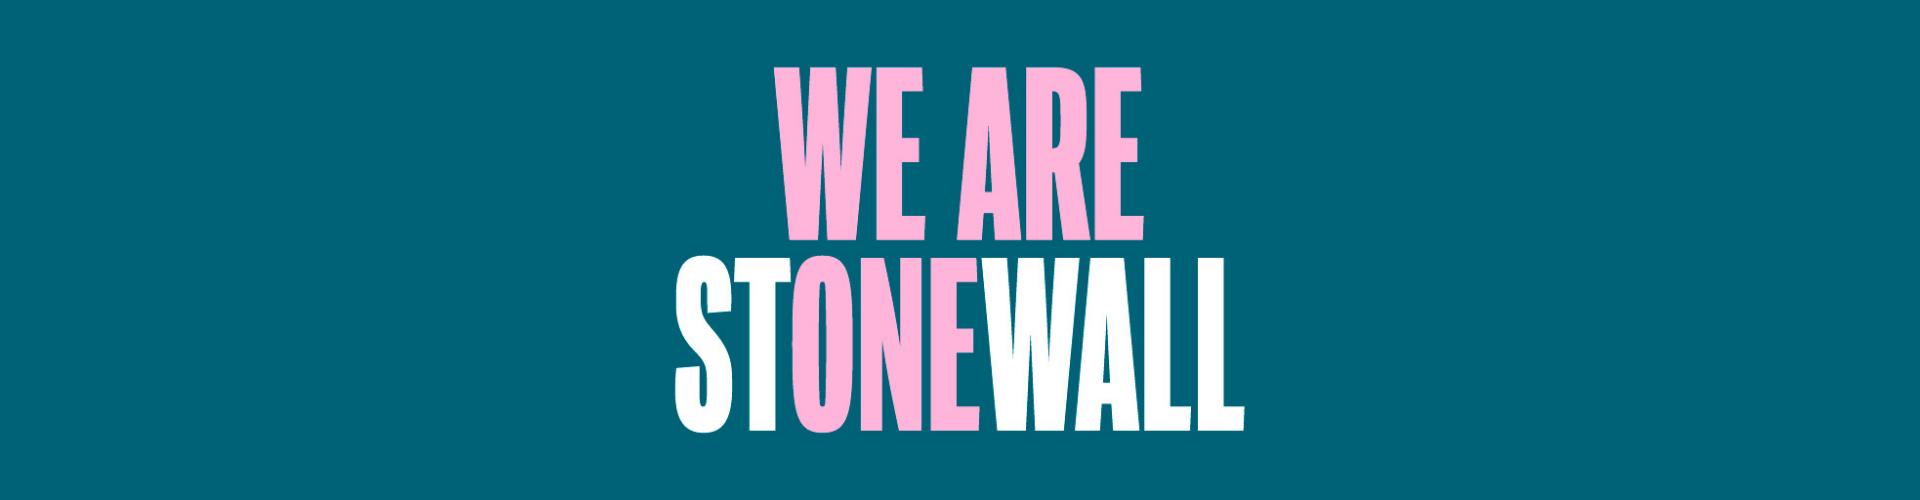 We are stonewall logo